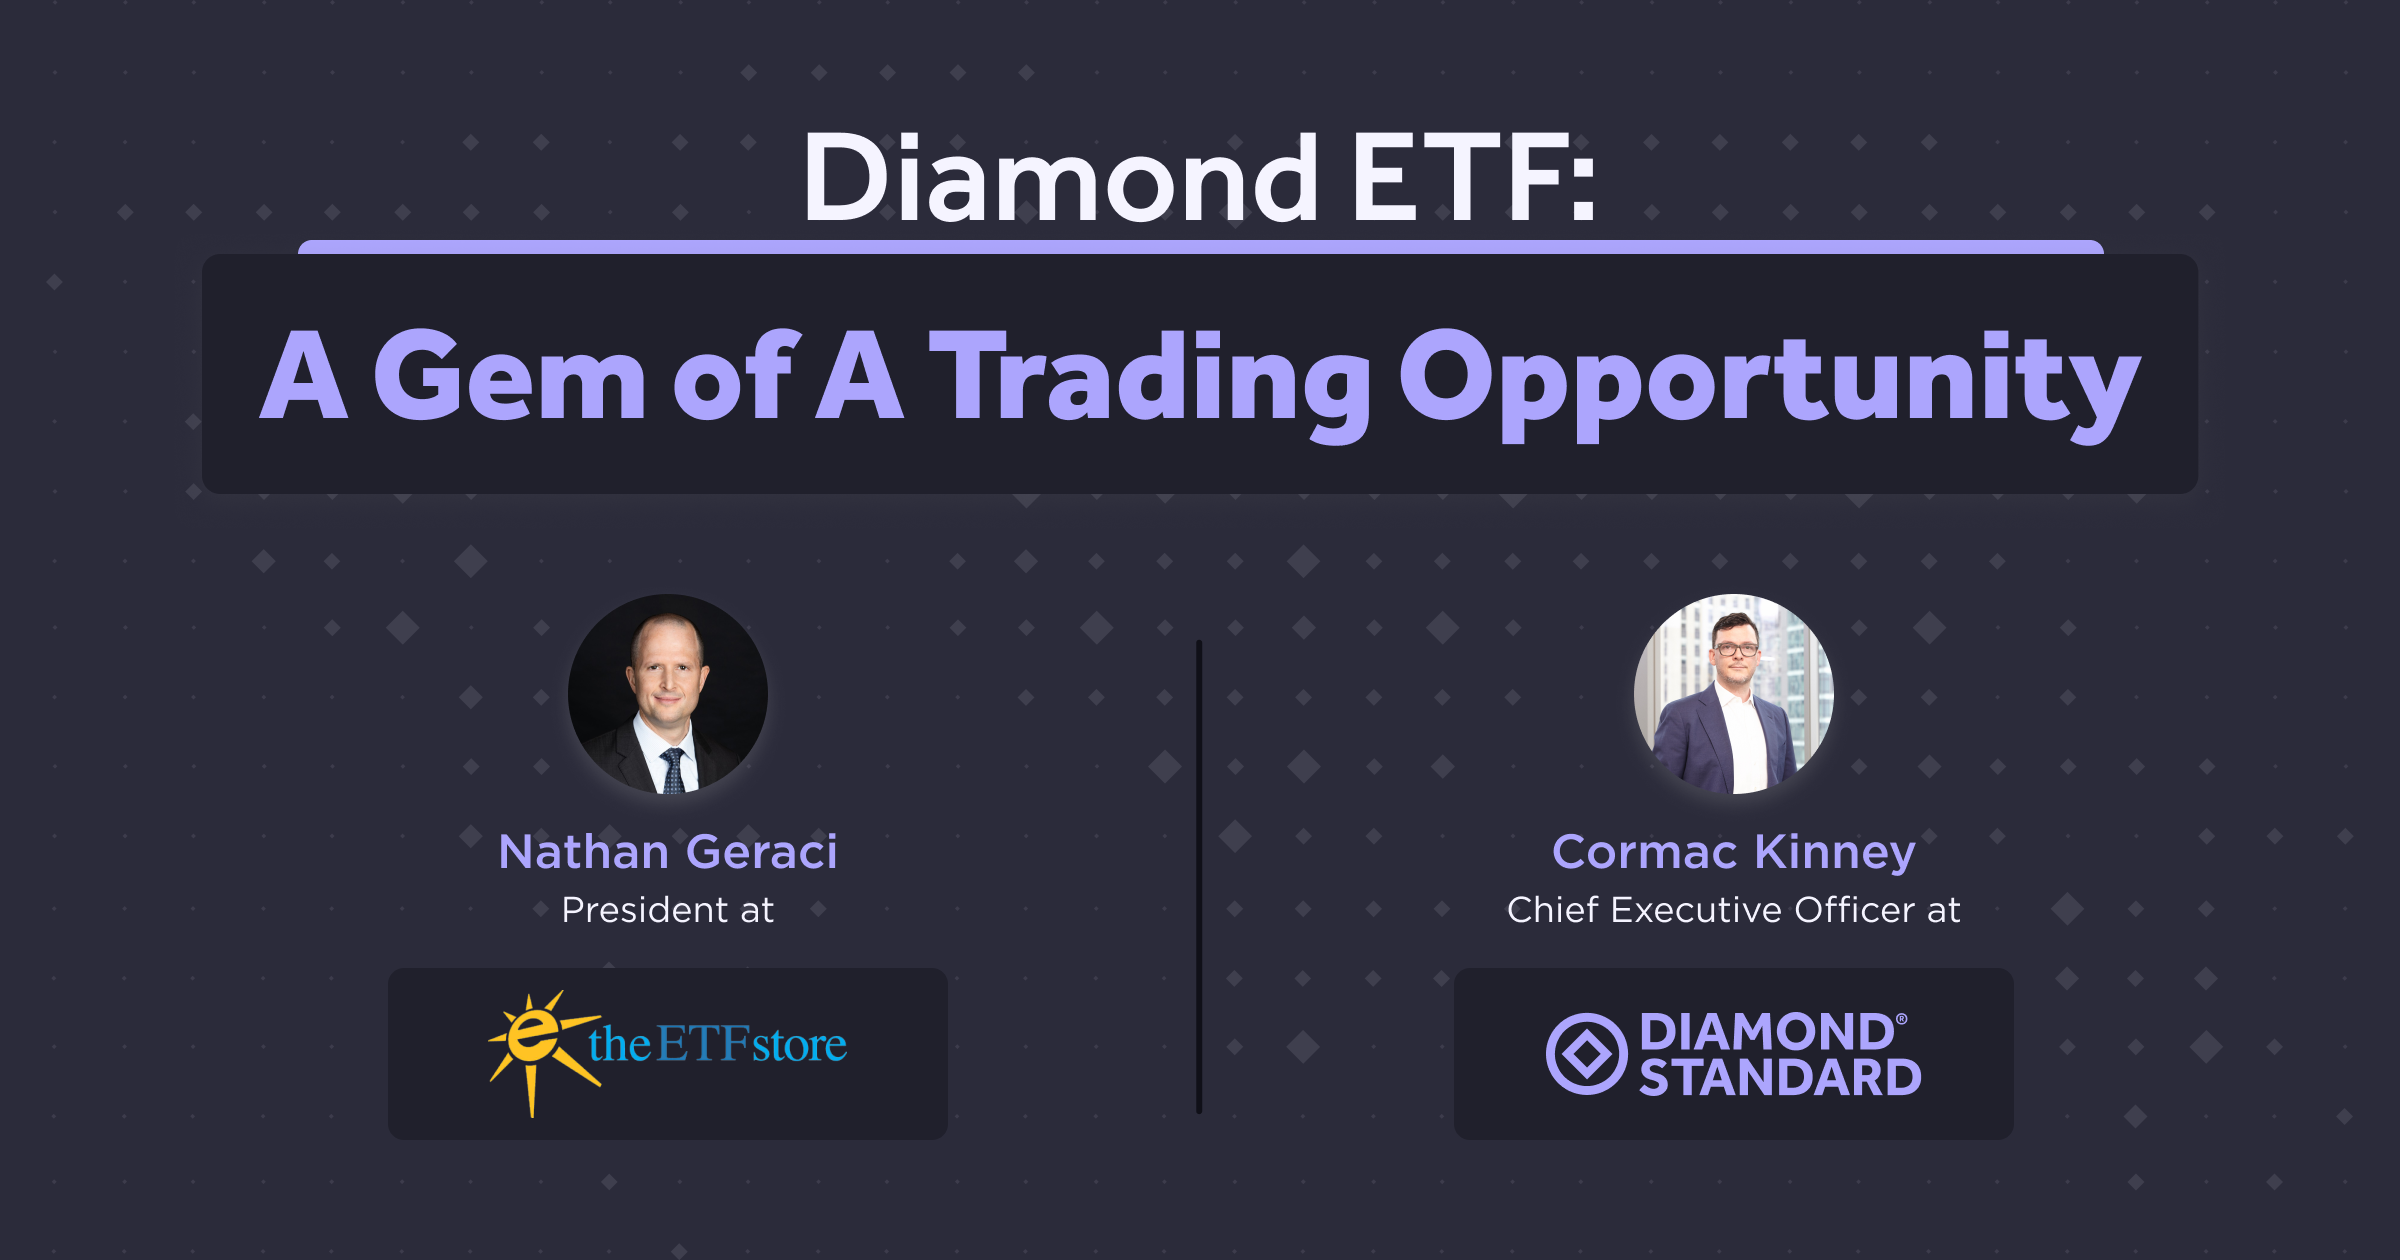 Diamond ETF: A Gem of a Trading Opportunity